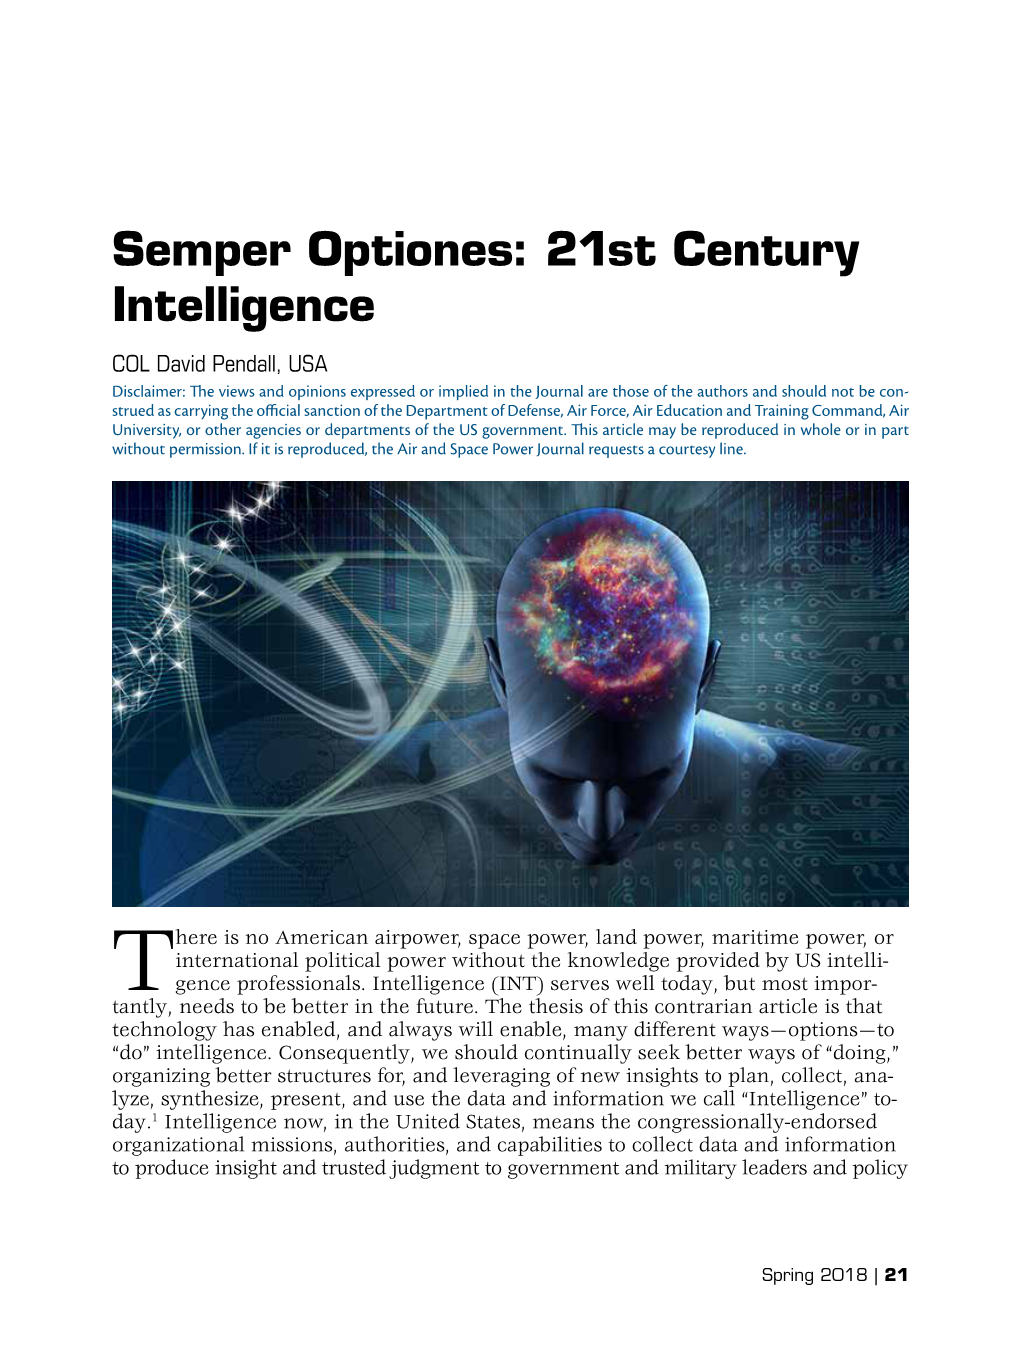 Semper Optiones: 21St Century Intelligence